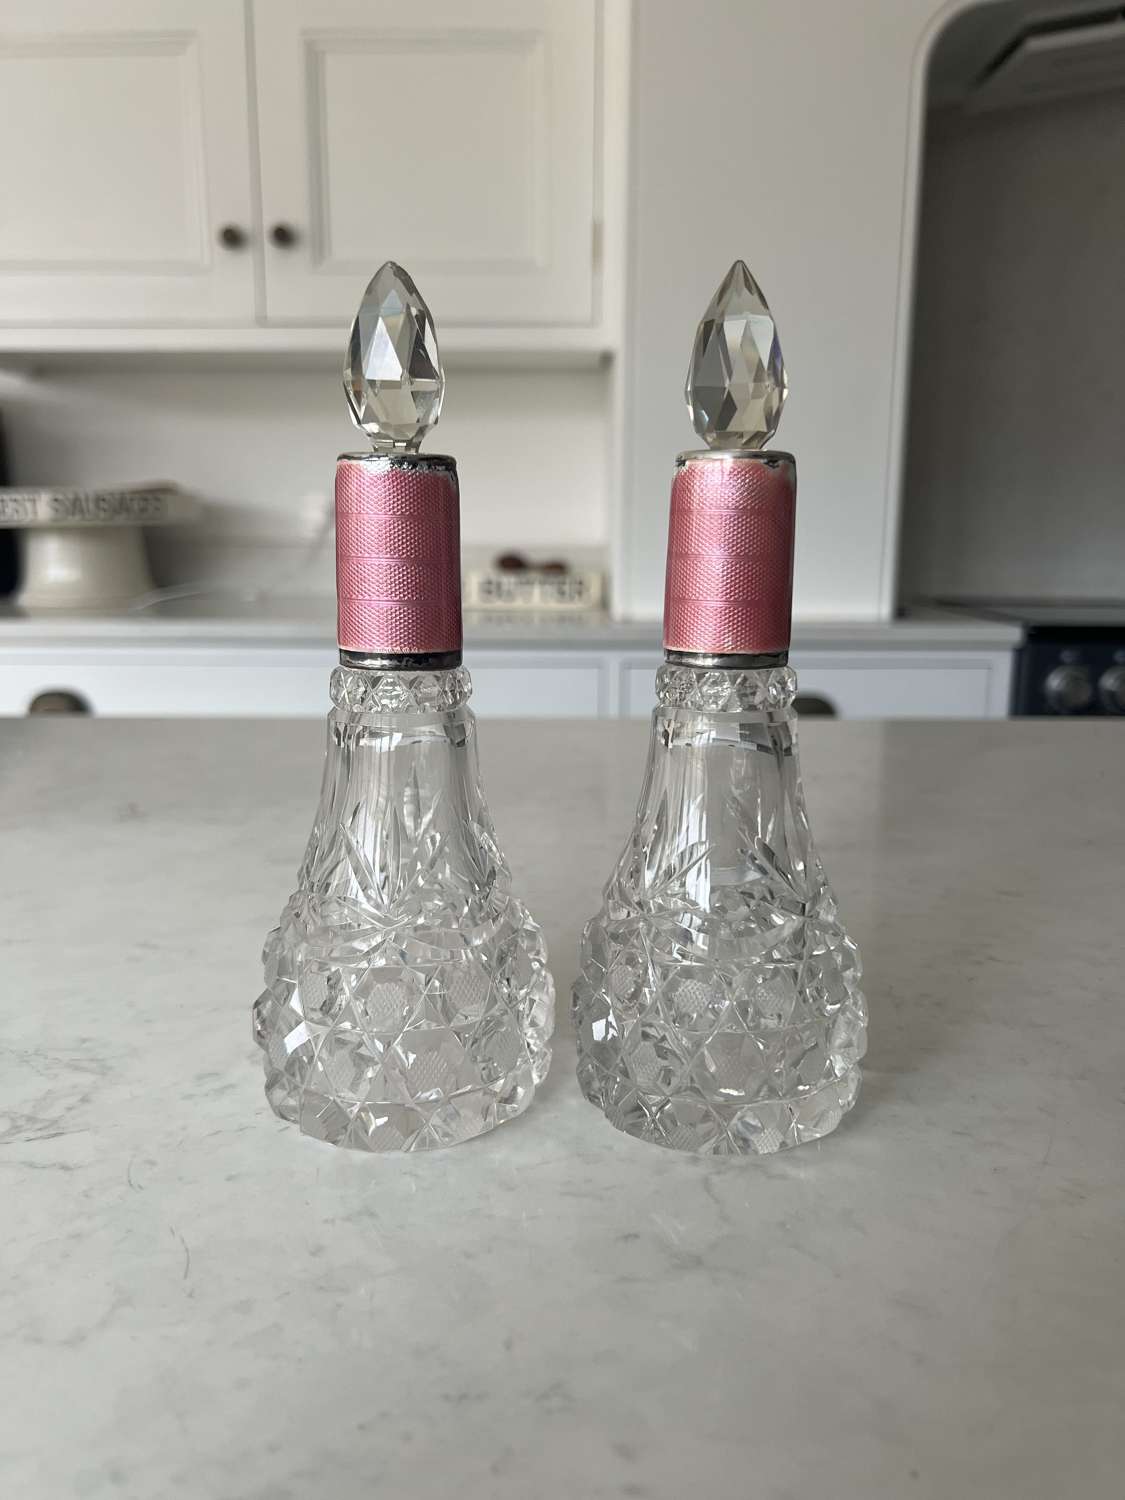 Pair of Edwardian Glass Perfume Bottles. Pink Enamel & Silver Tops.